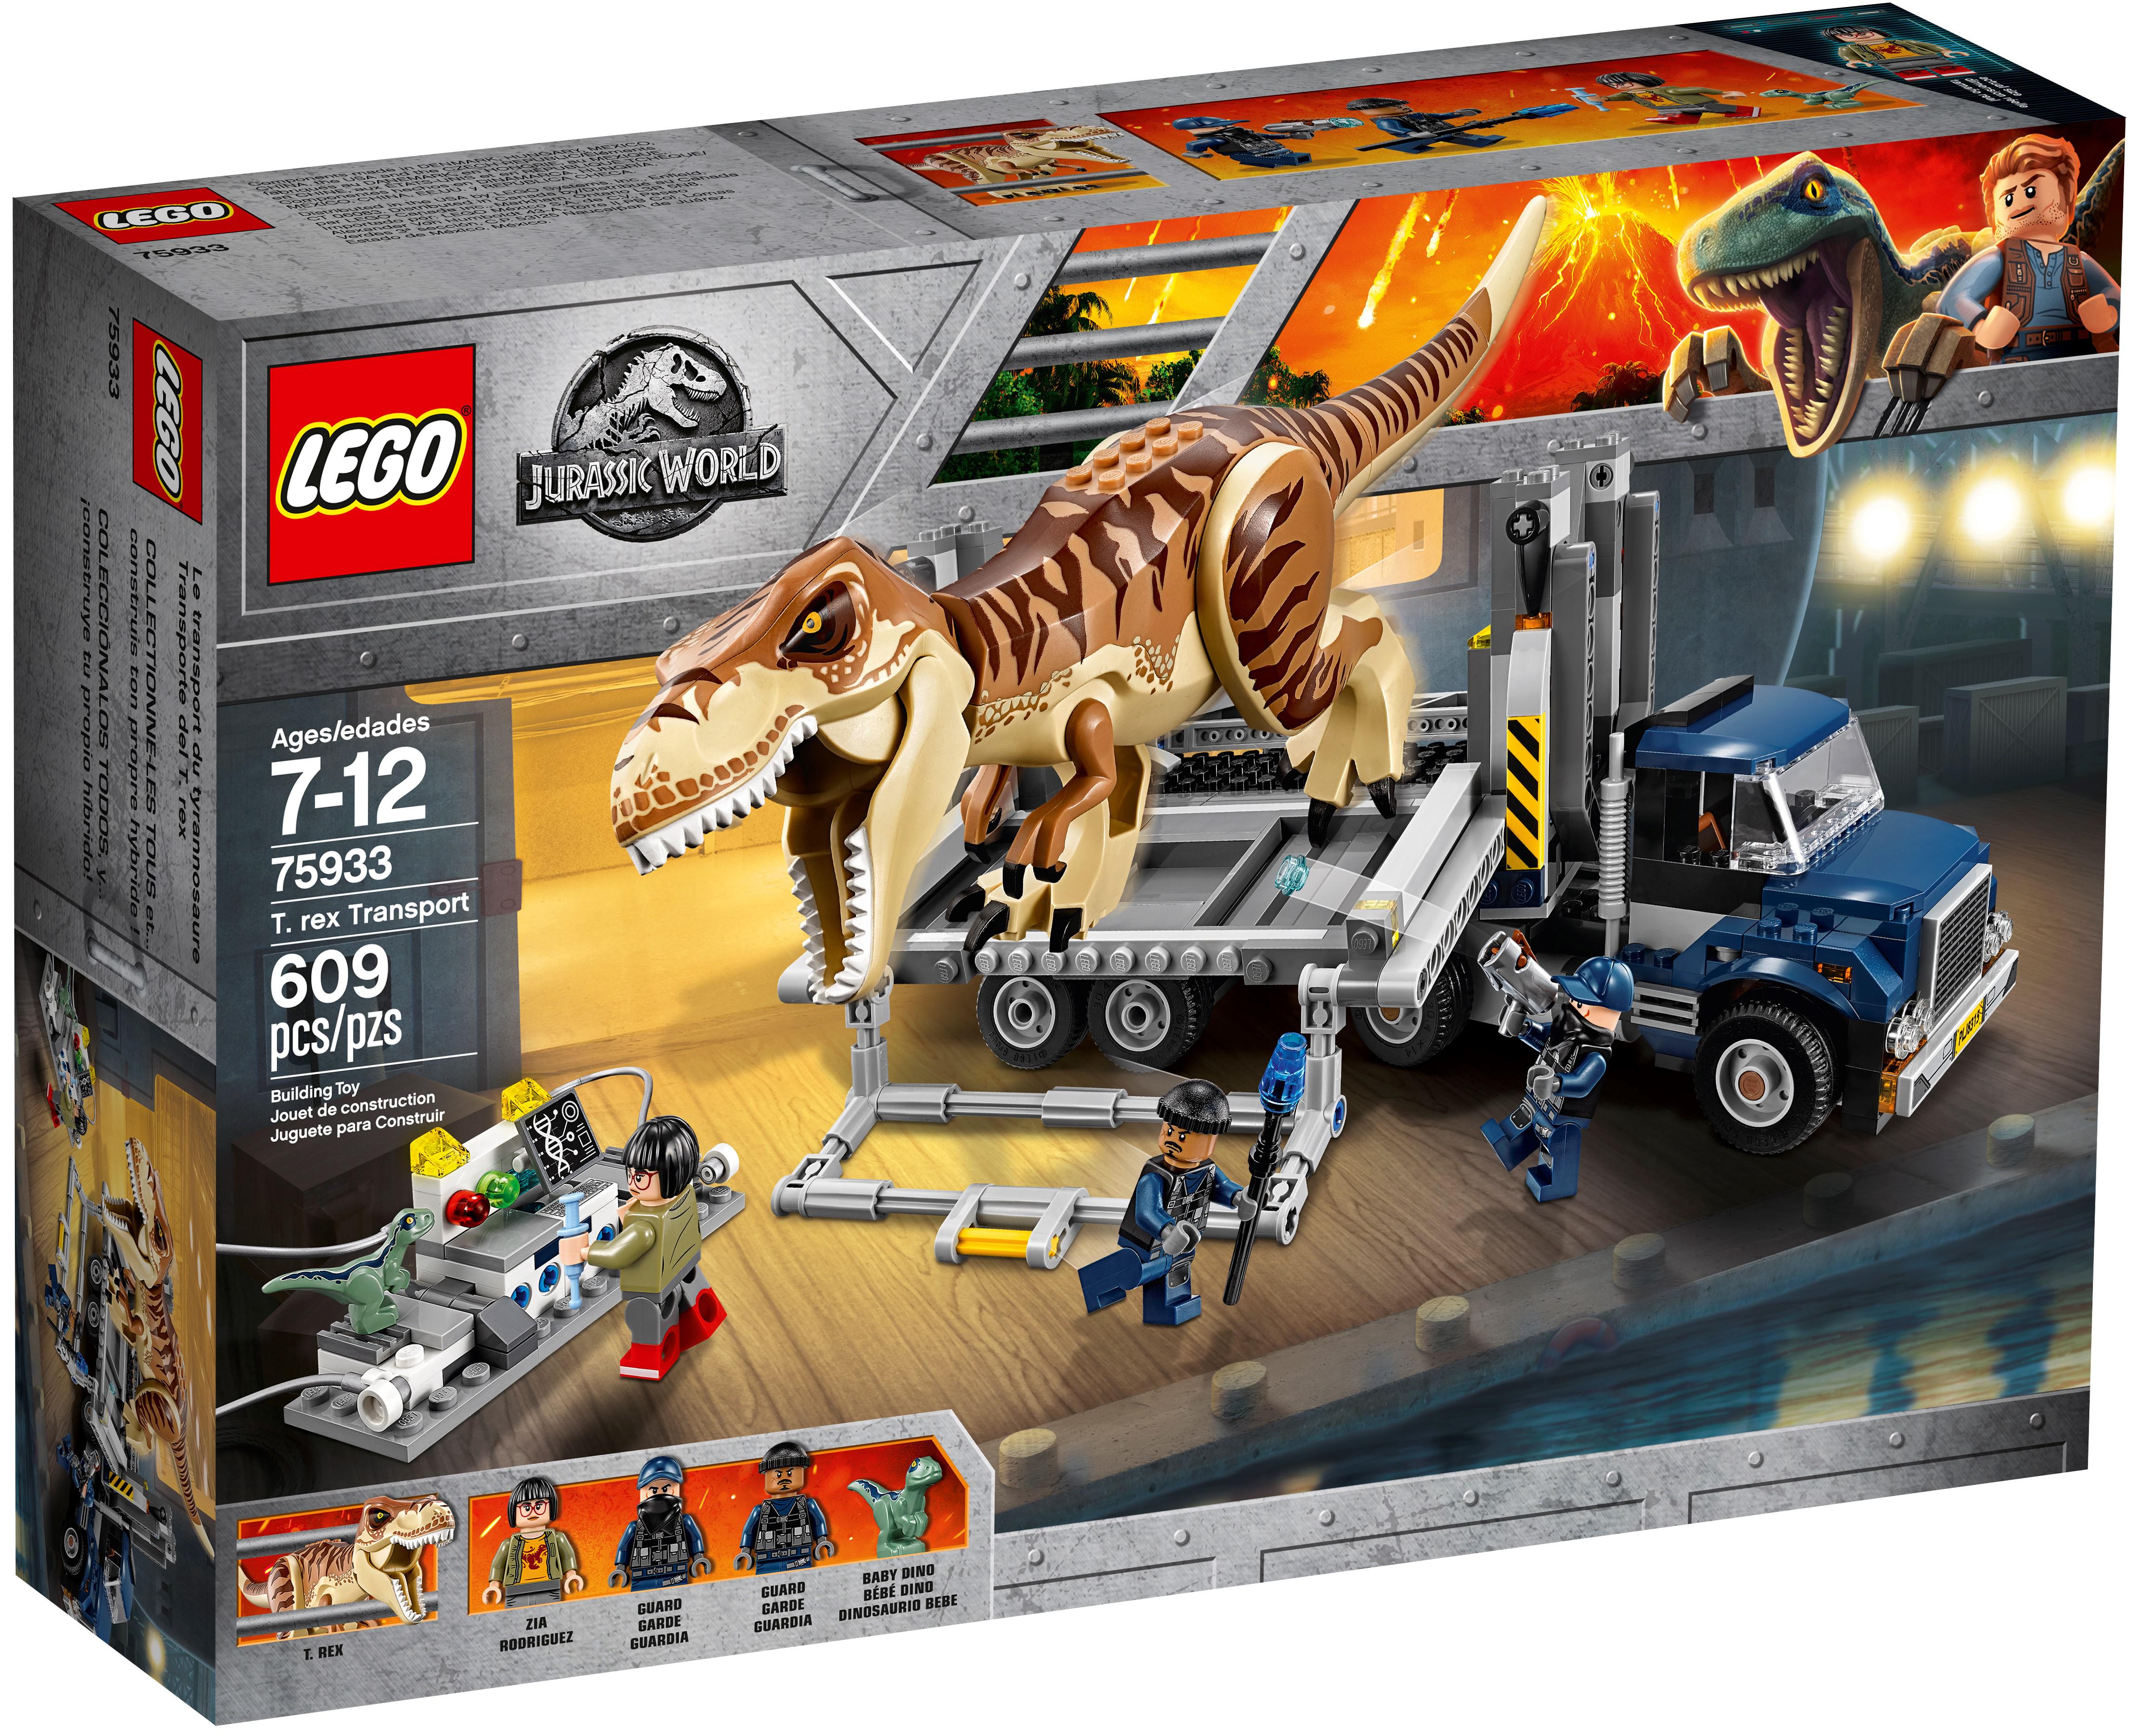 LEGO Jurassic World Fallen Kingdom T-Rex Dinosaur 04 Tyrannosaurus Rex REAL  LEGO